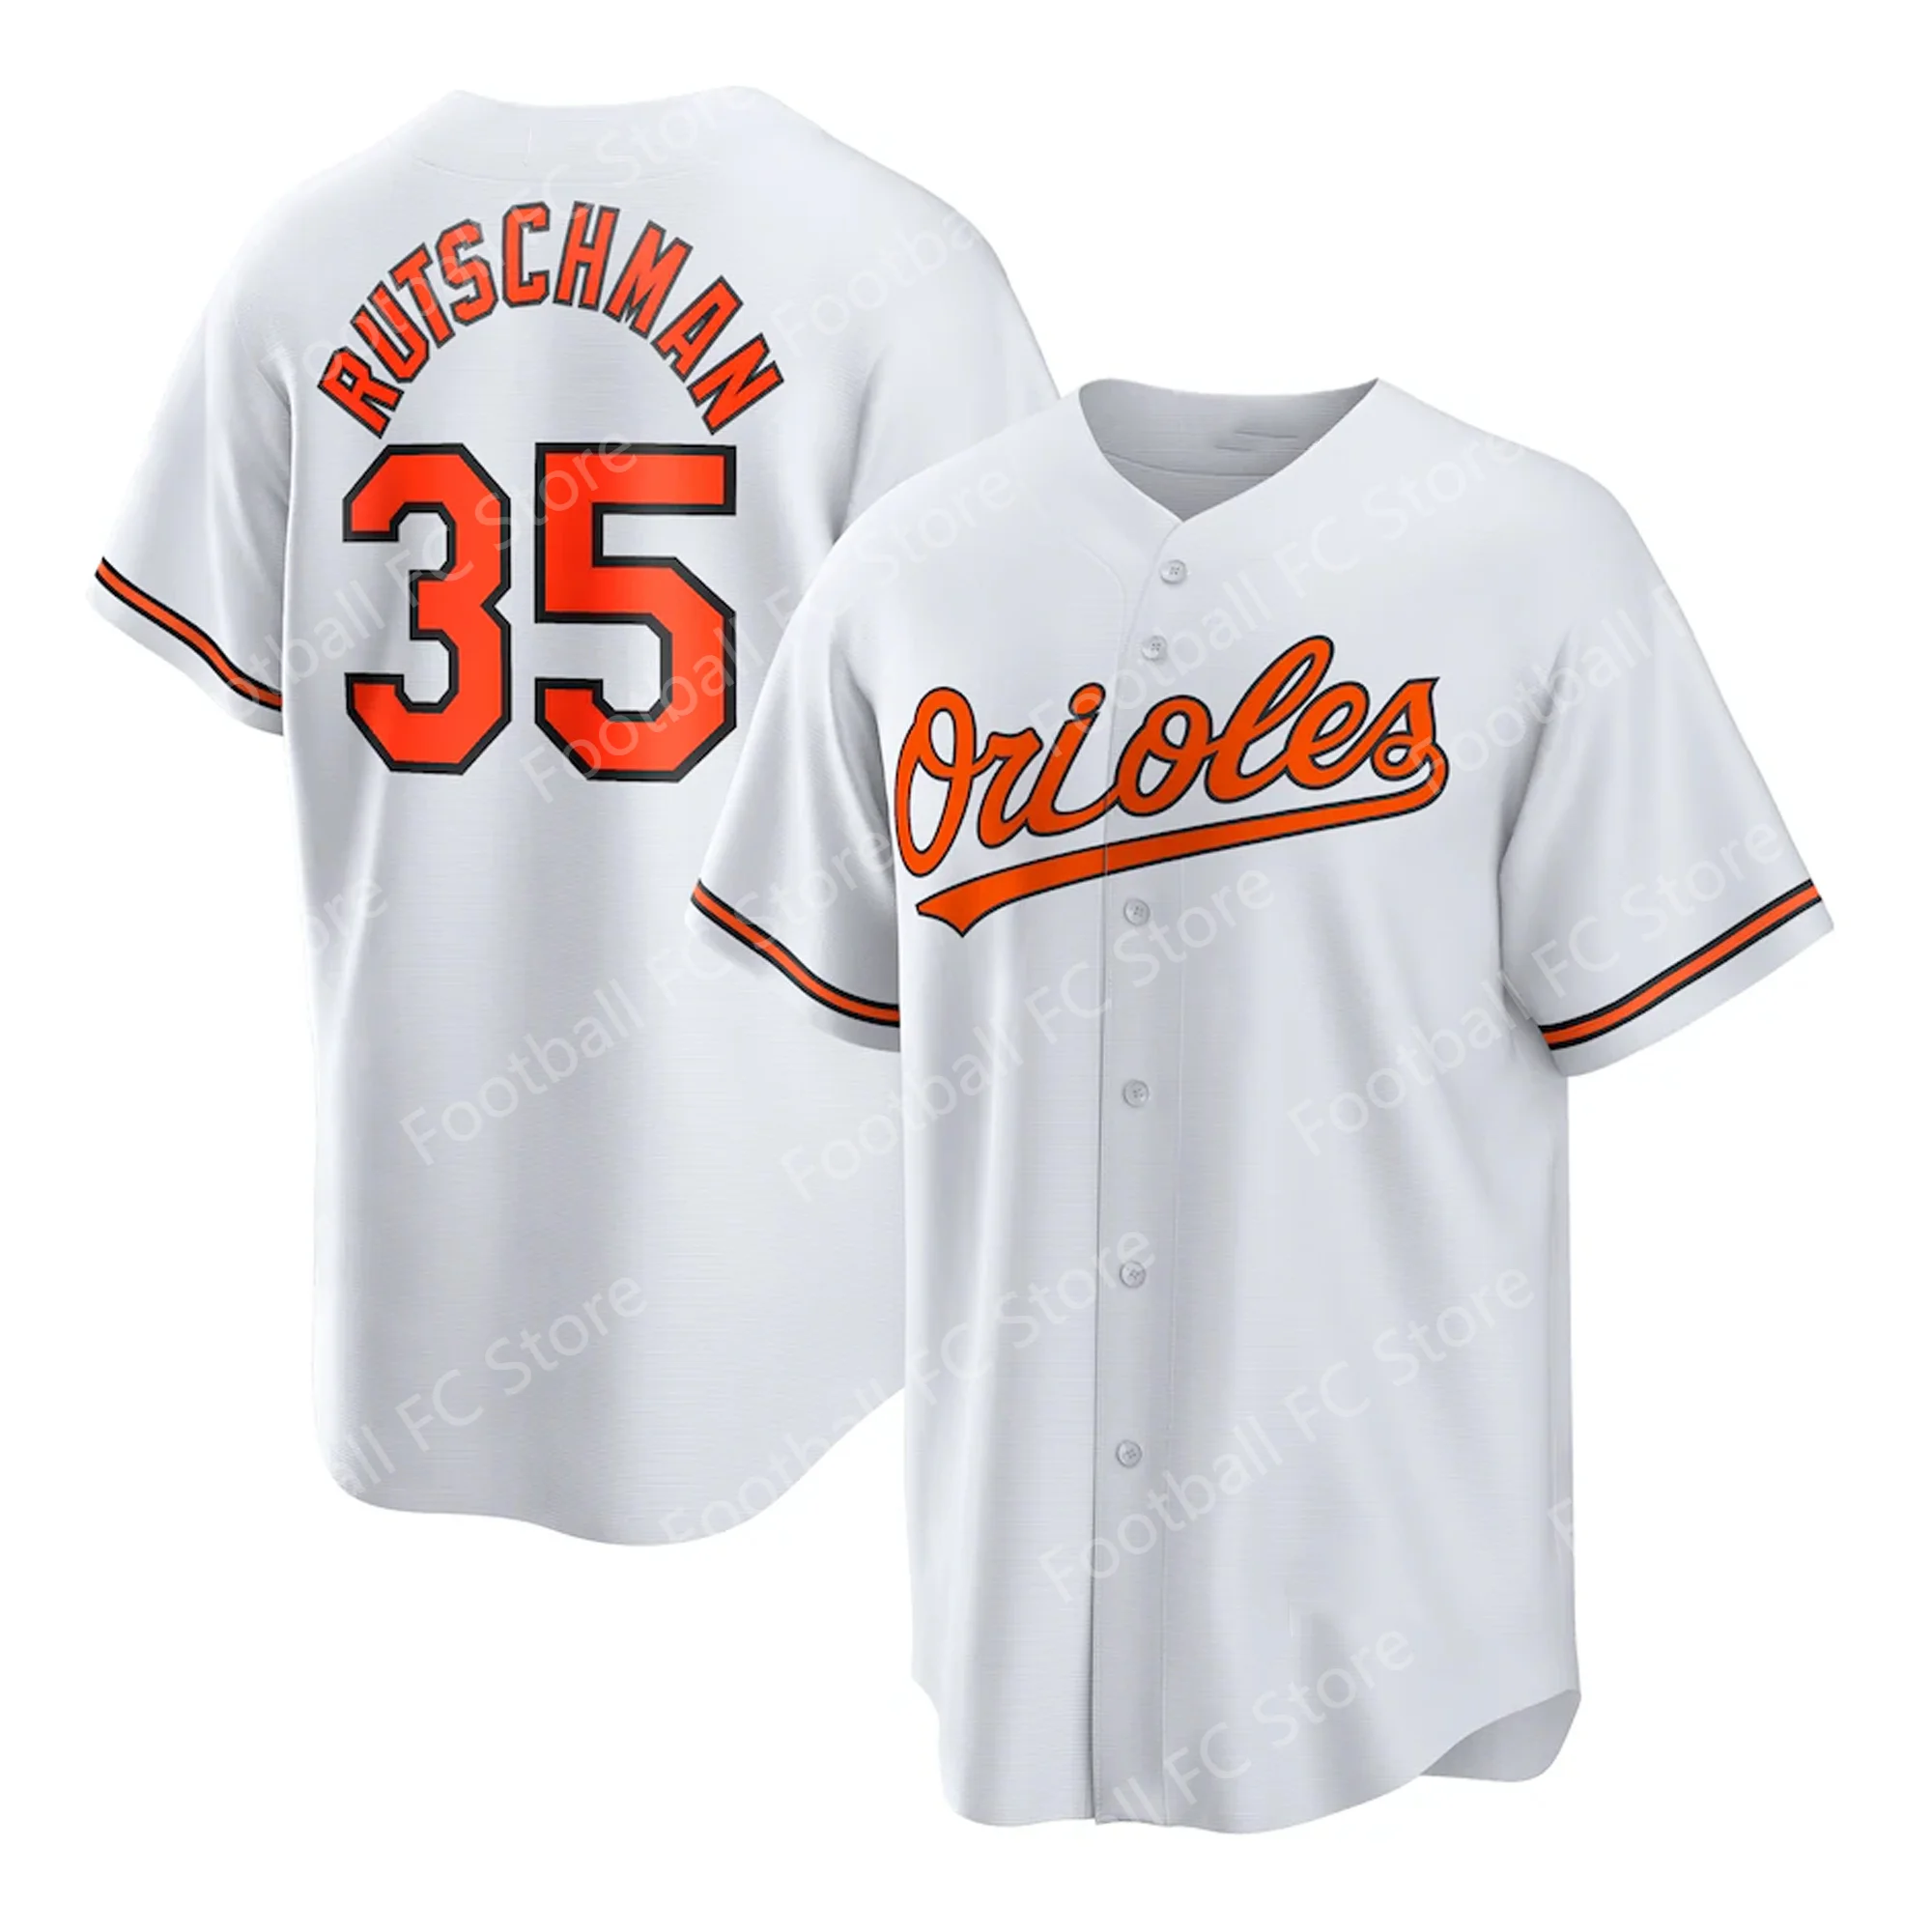 Rutsch man Baltimore Orioles City Connect trikot für Fans, Trainings uniform, neue Baseball Edition, Fans Kit, Sonderausgabe, 2024